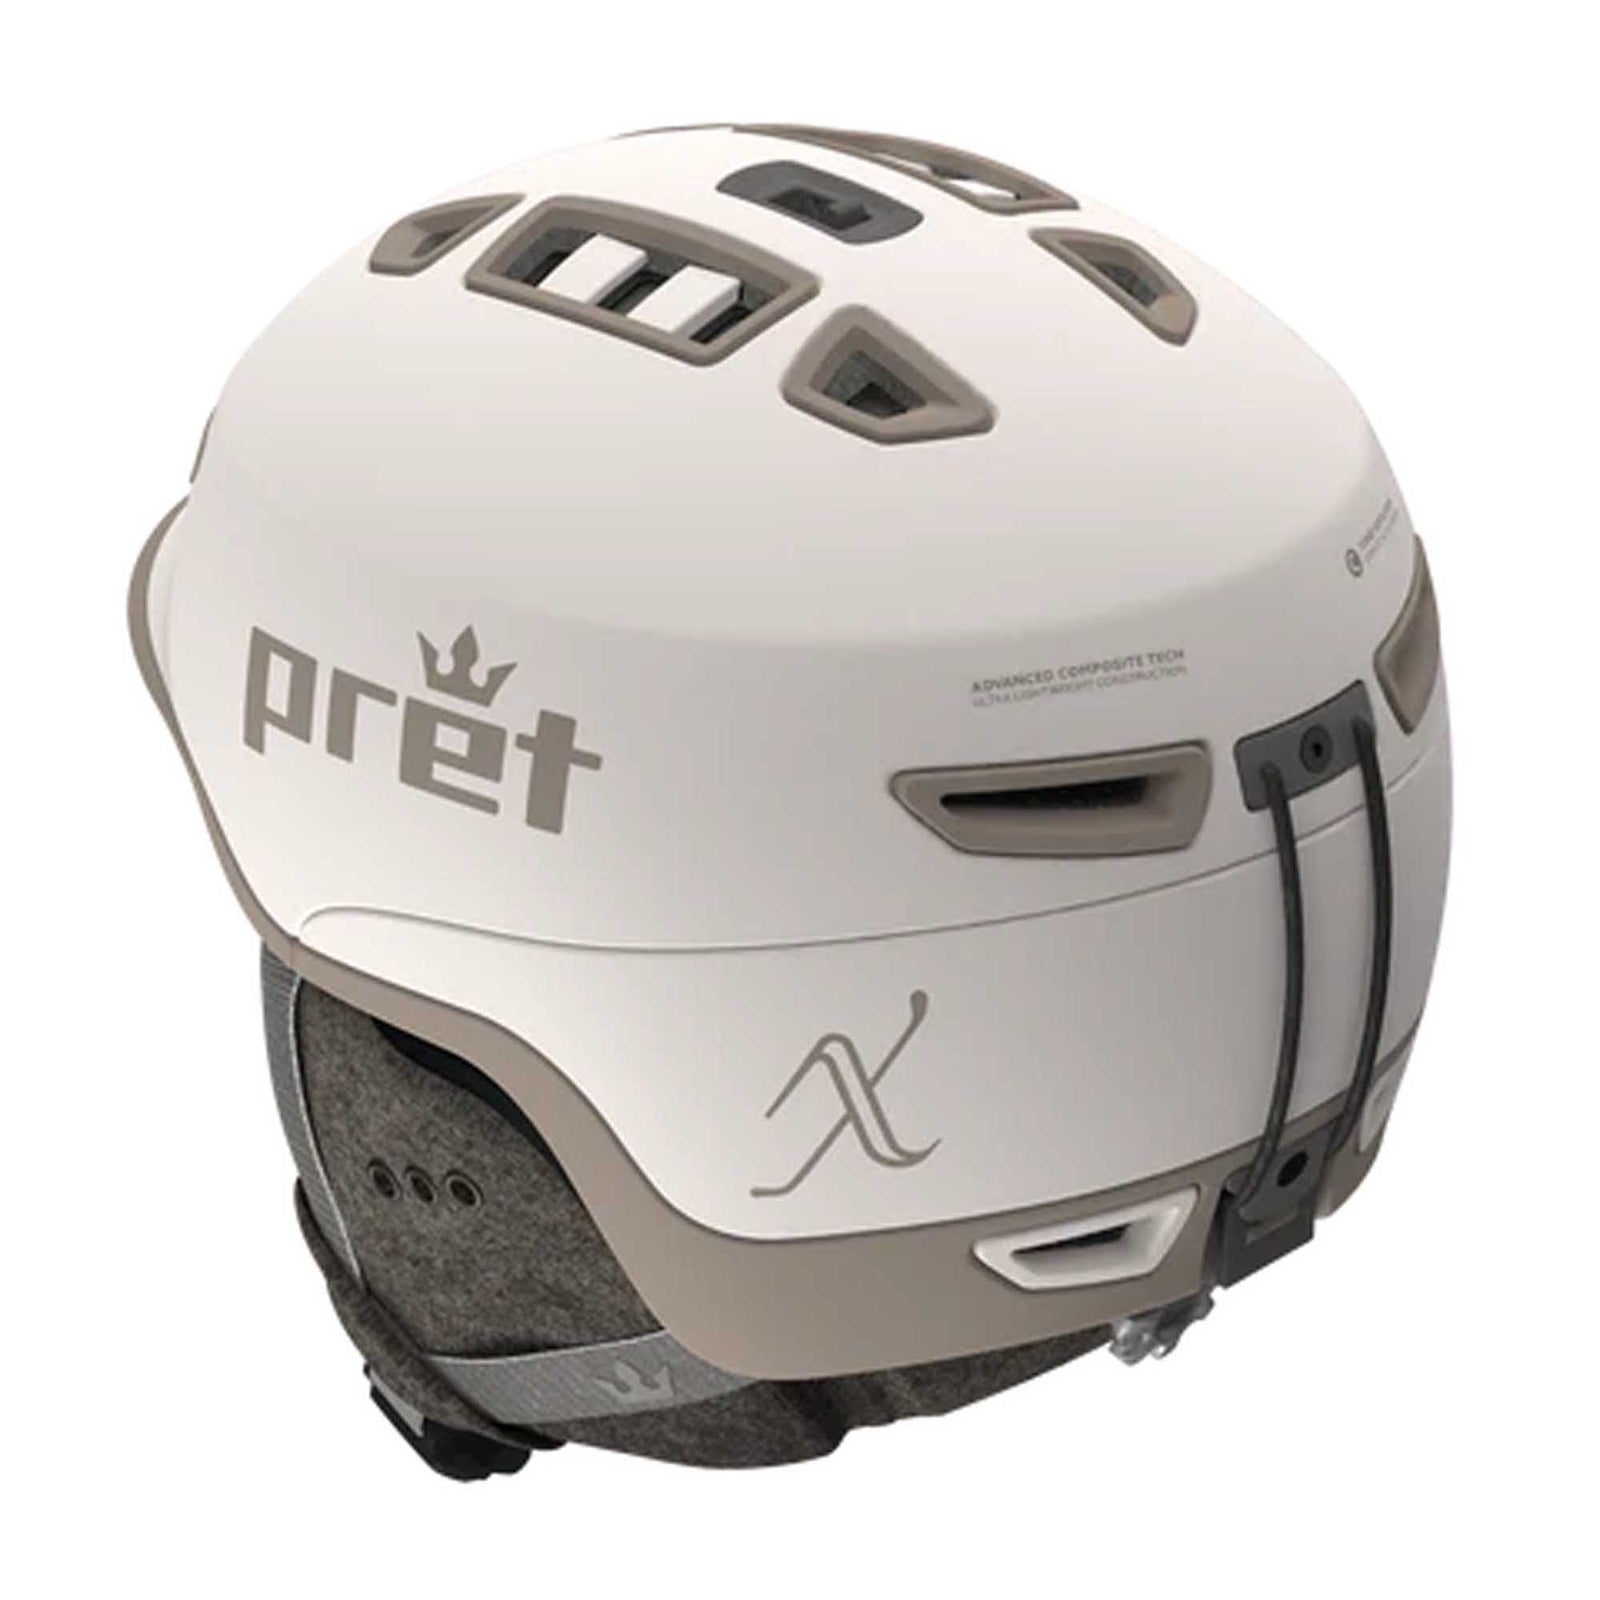 Pret Women's Vision X Helmet 2023 